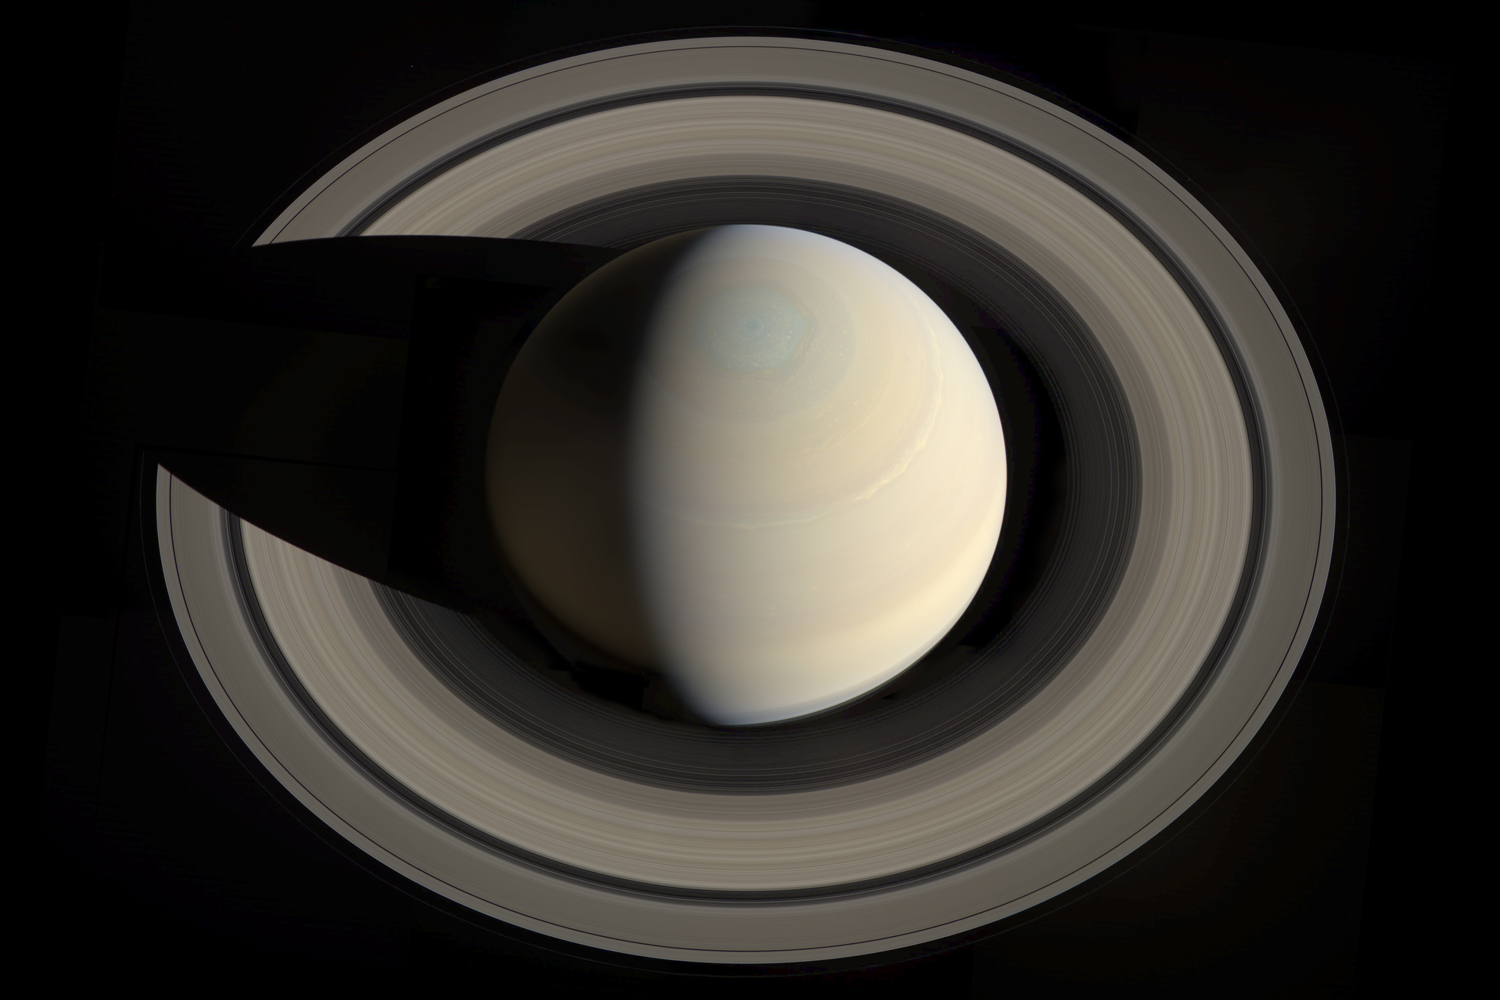 Mosaic Image of Saturn